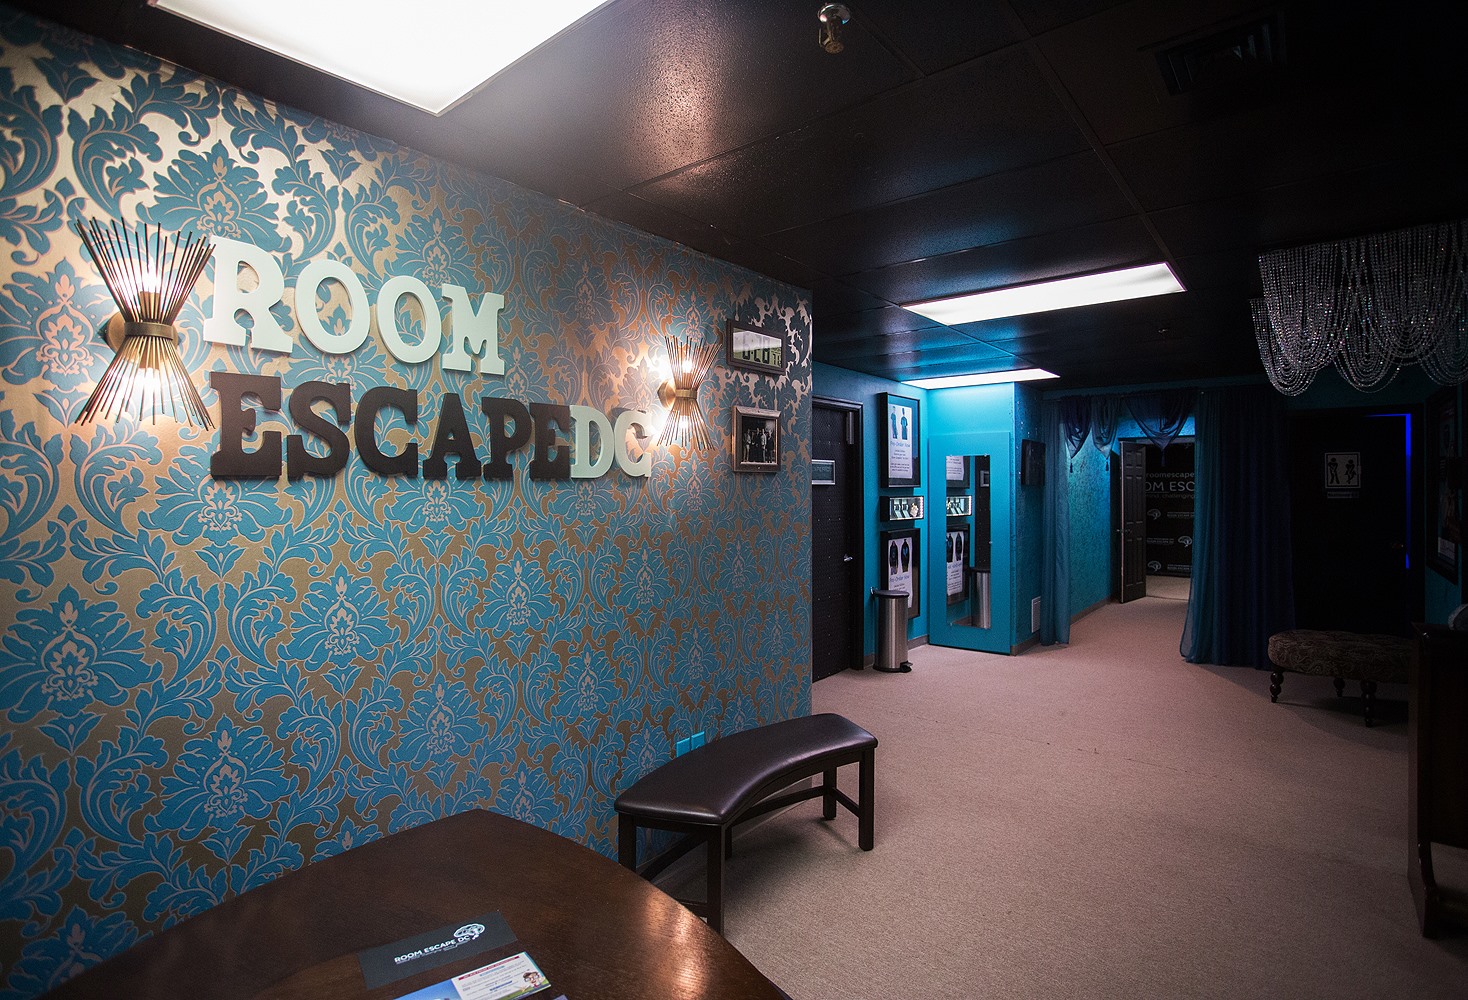 Bonds Escape Room - 15 Escape Rooms (Fairfax and Arlington)